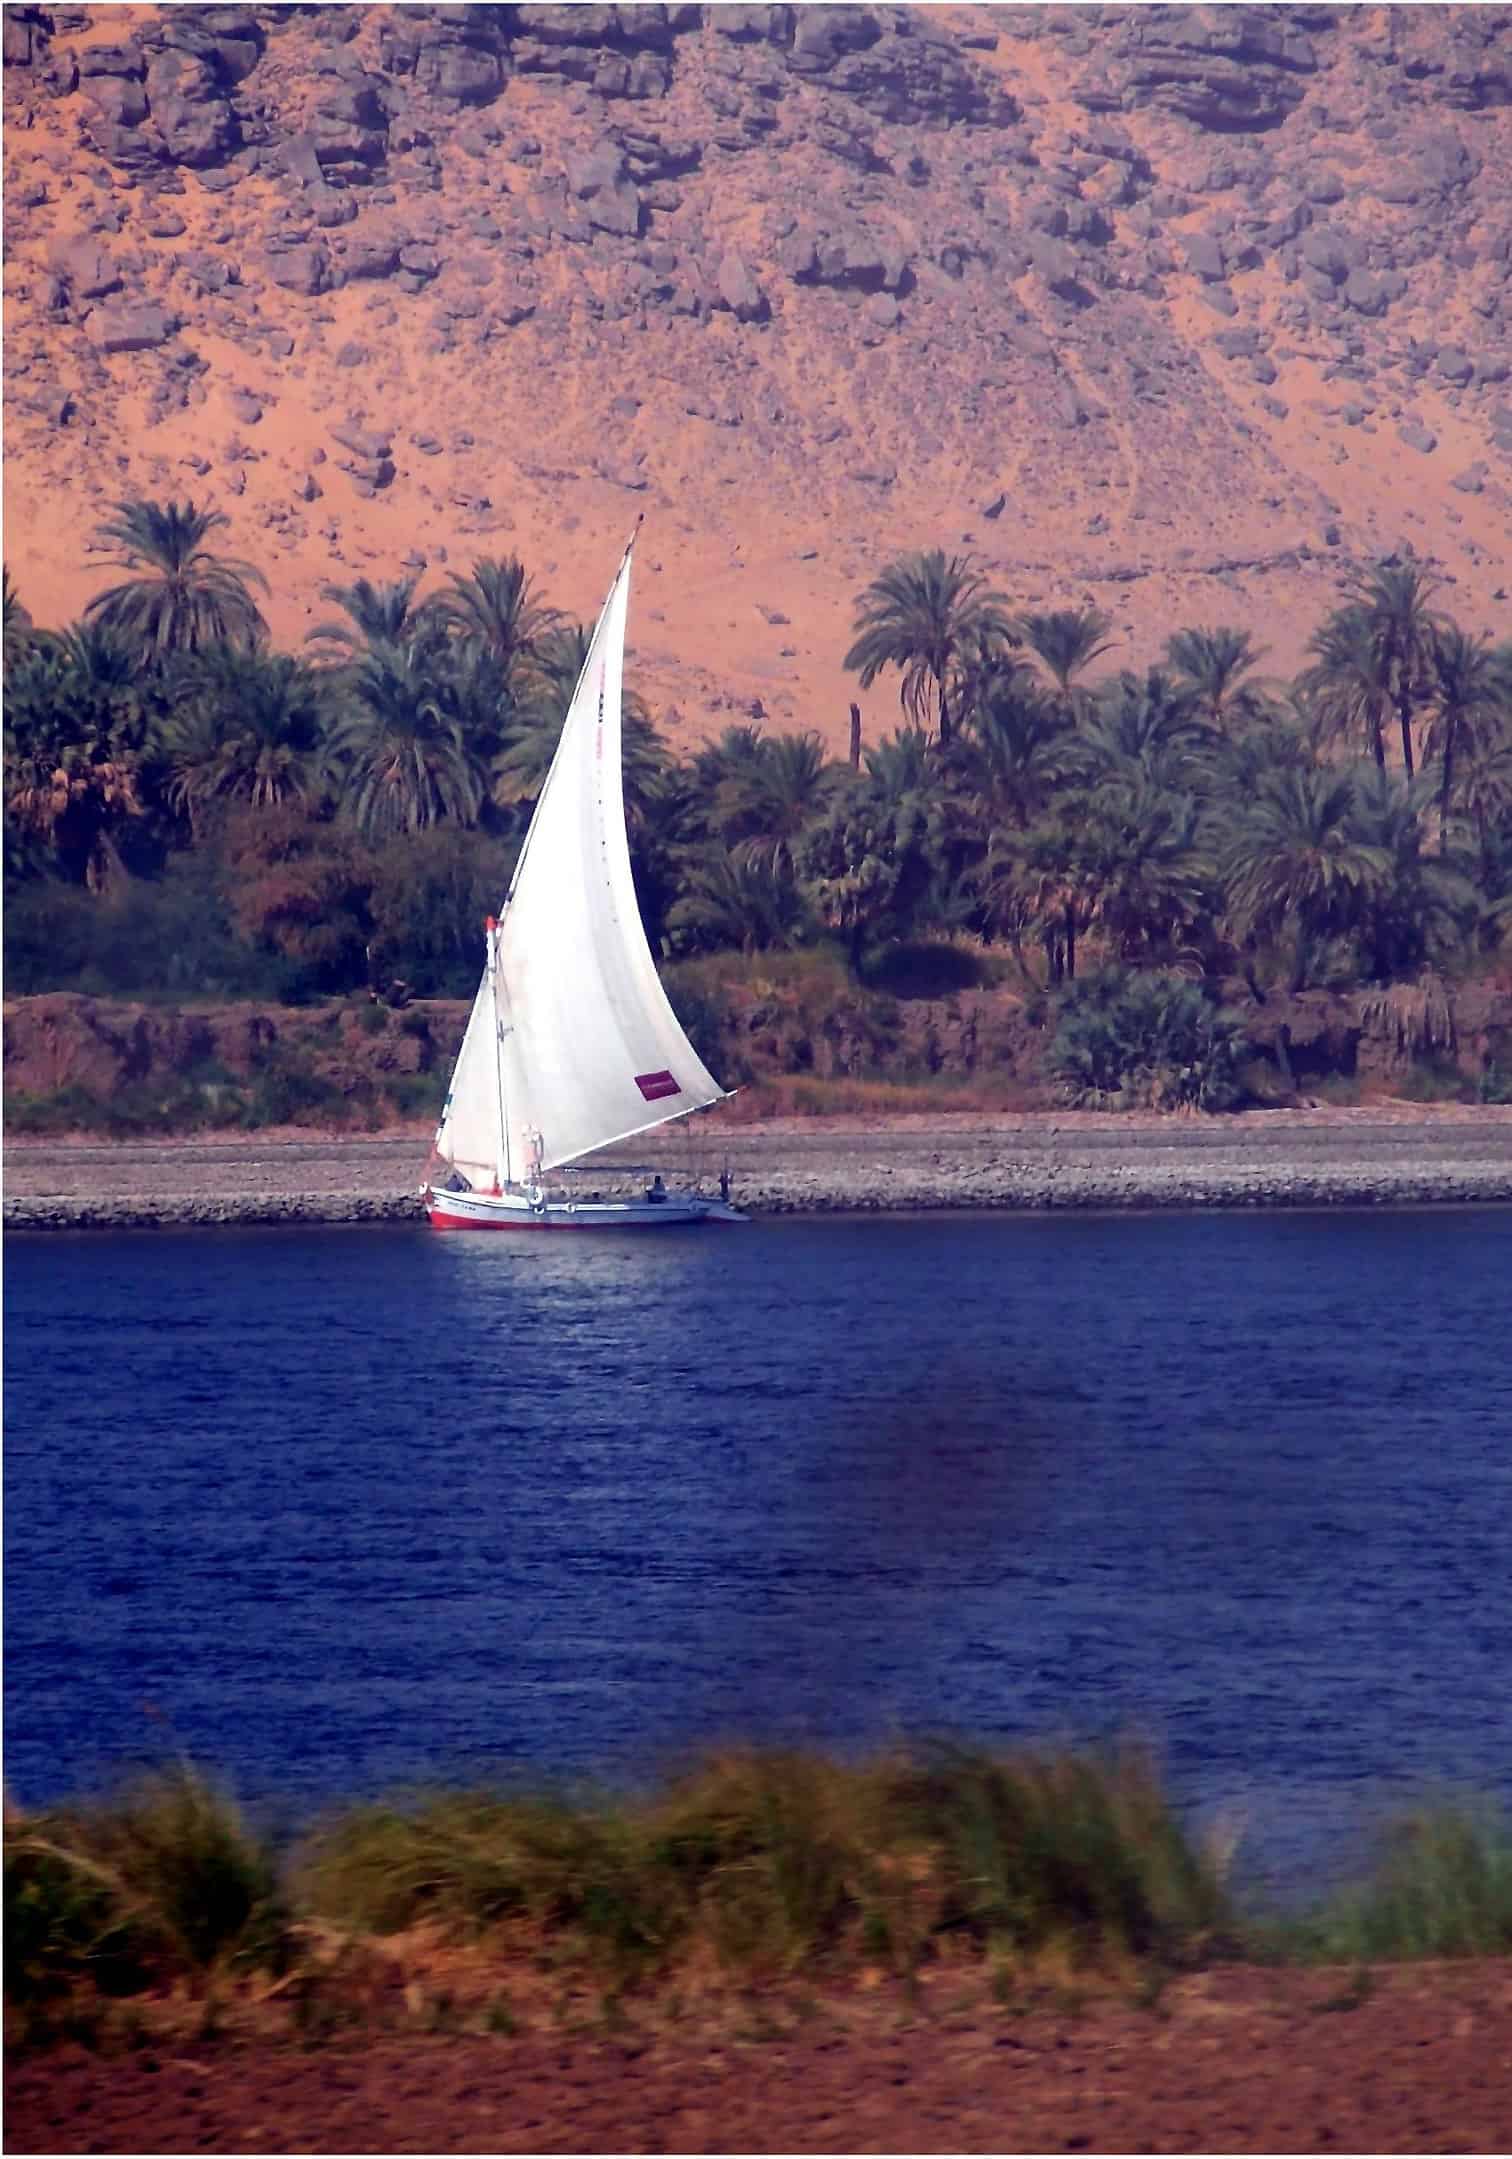 Pyramid of Giza Facts, Nile near Aswan